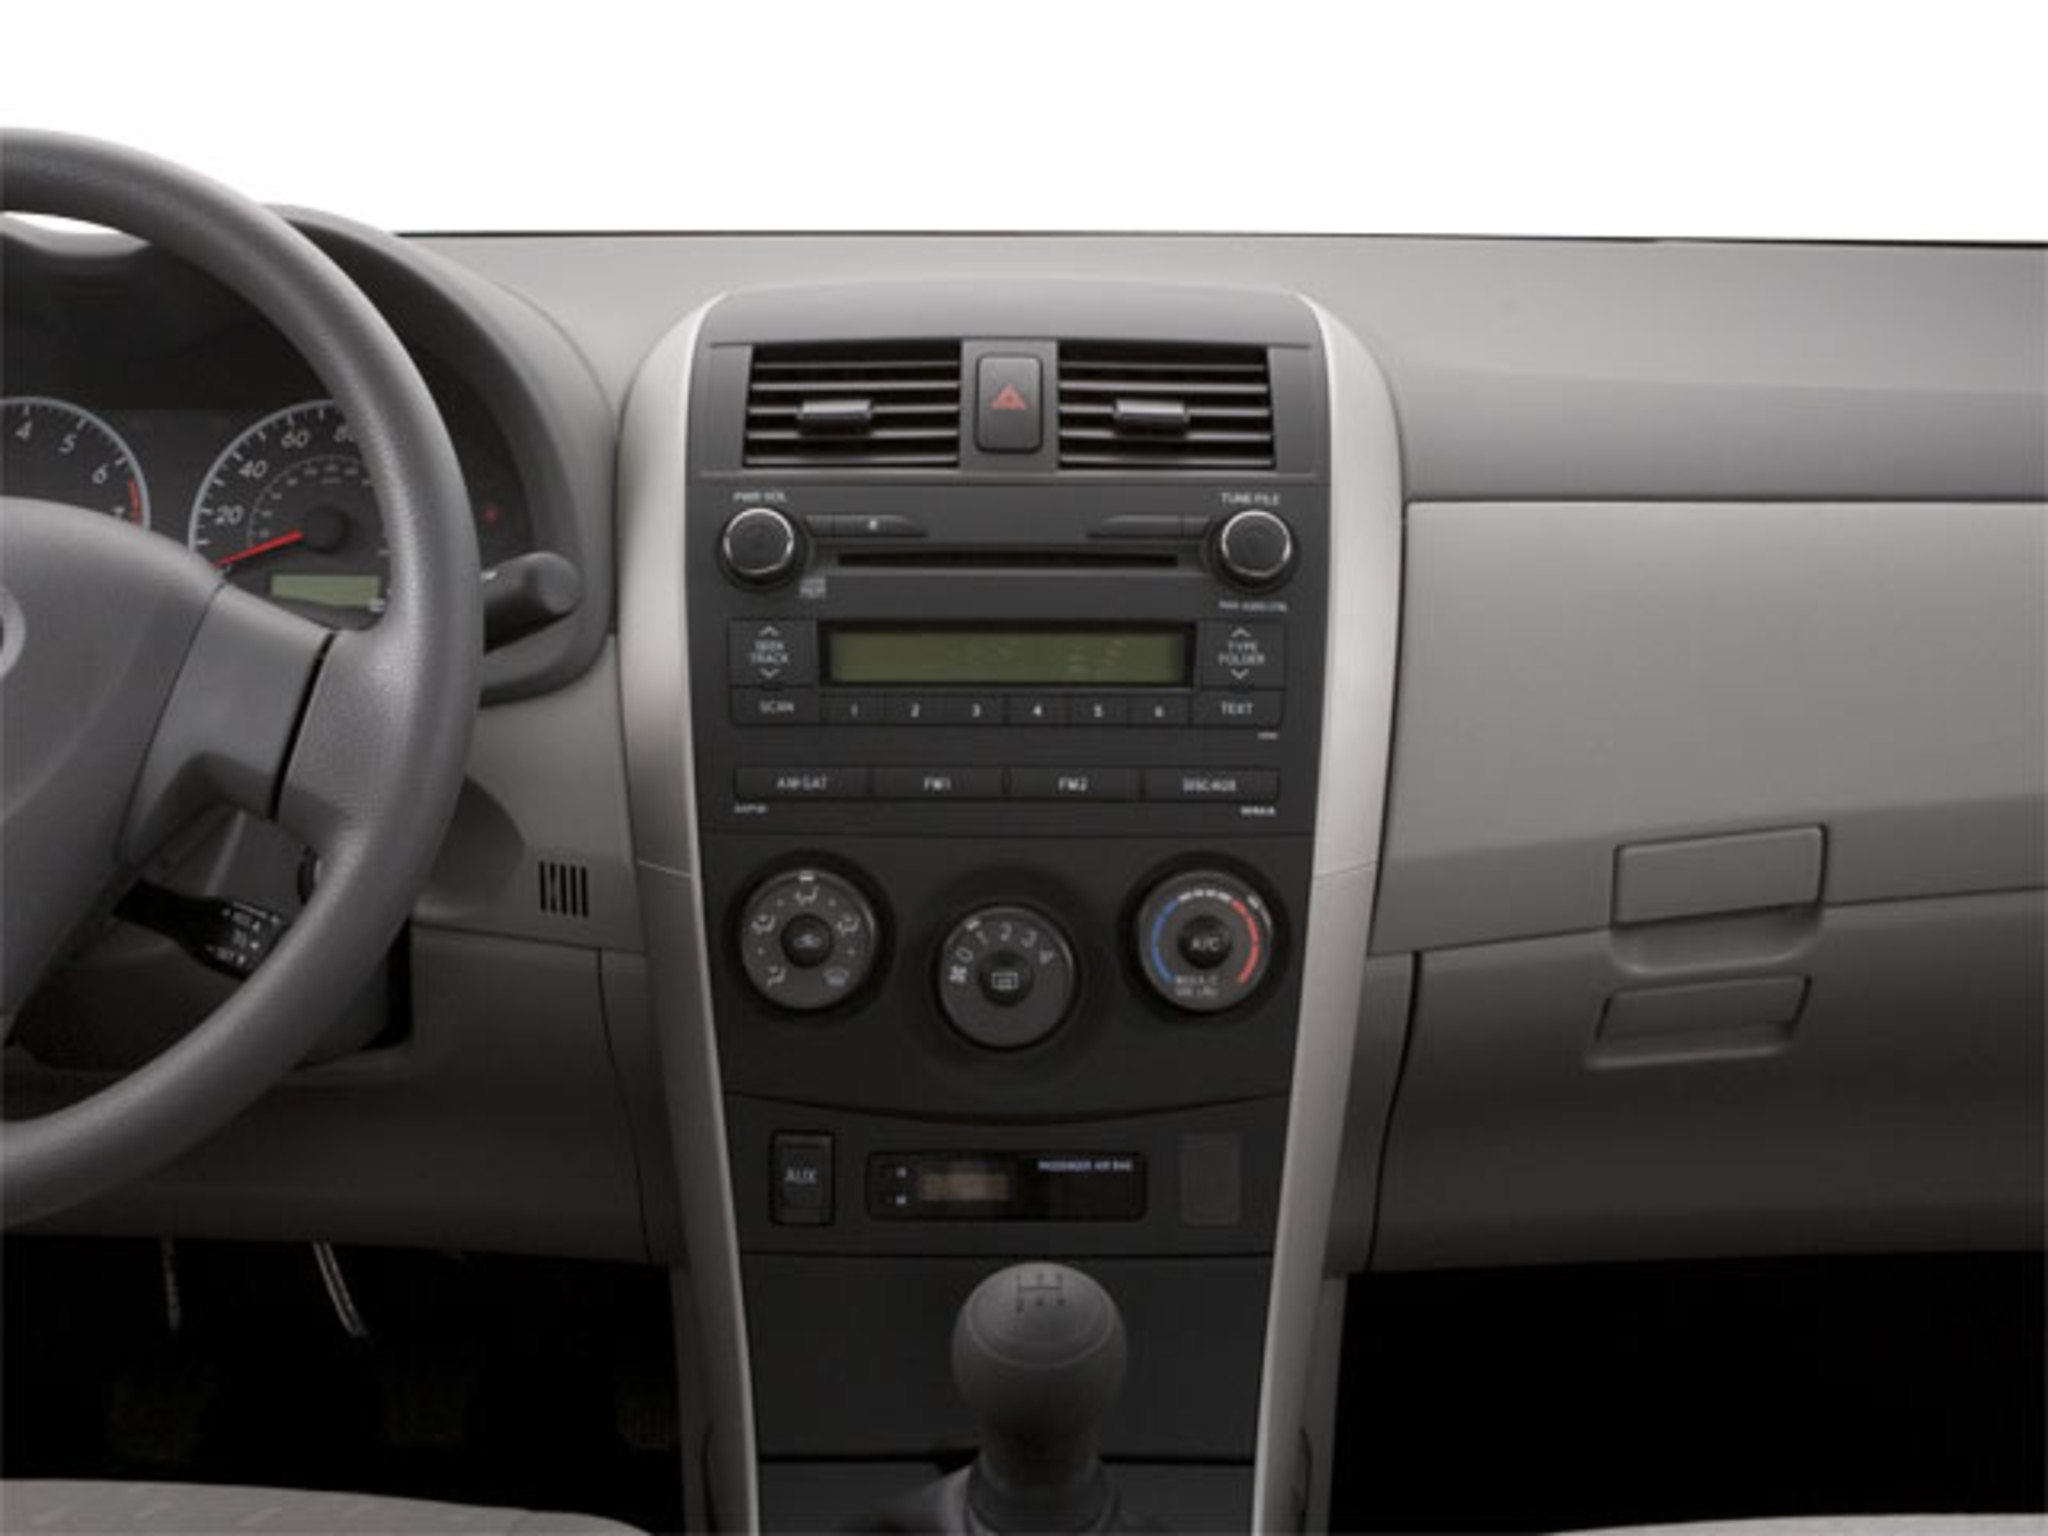 2010 Toyota Corolla Compare Prices Trims Options Specs